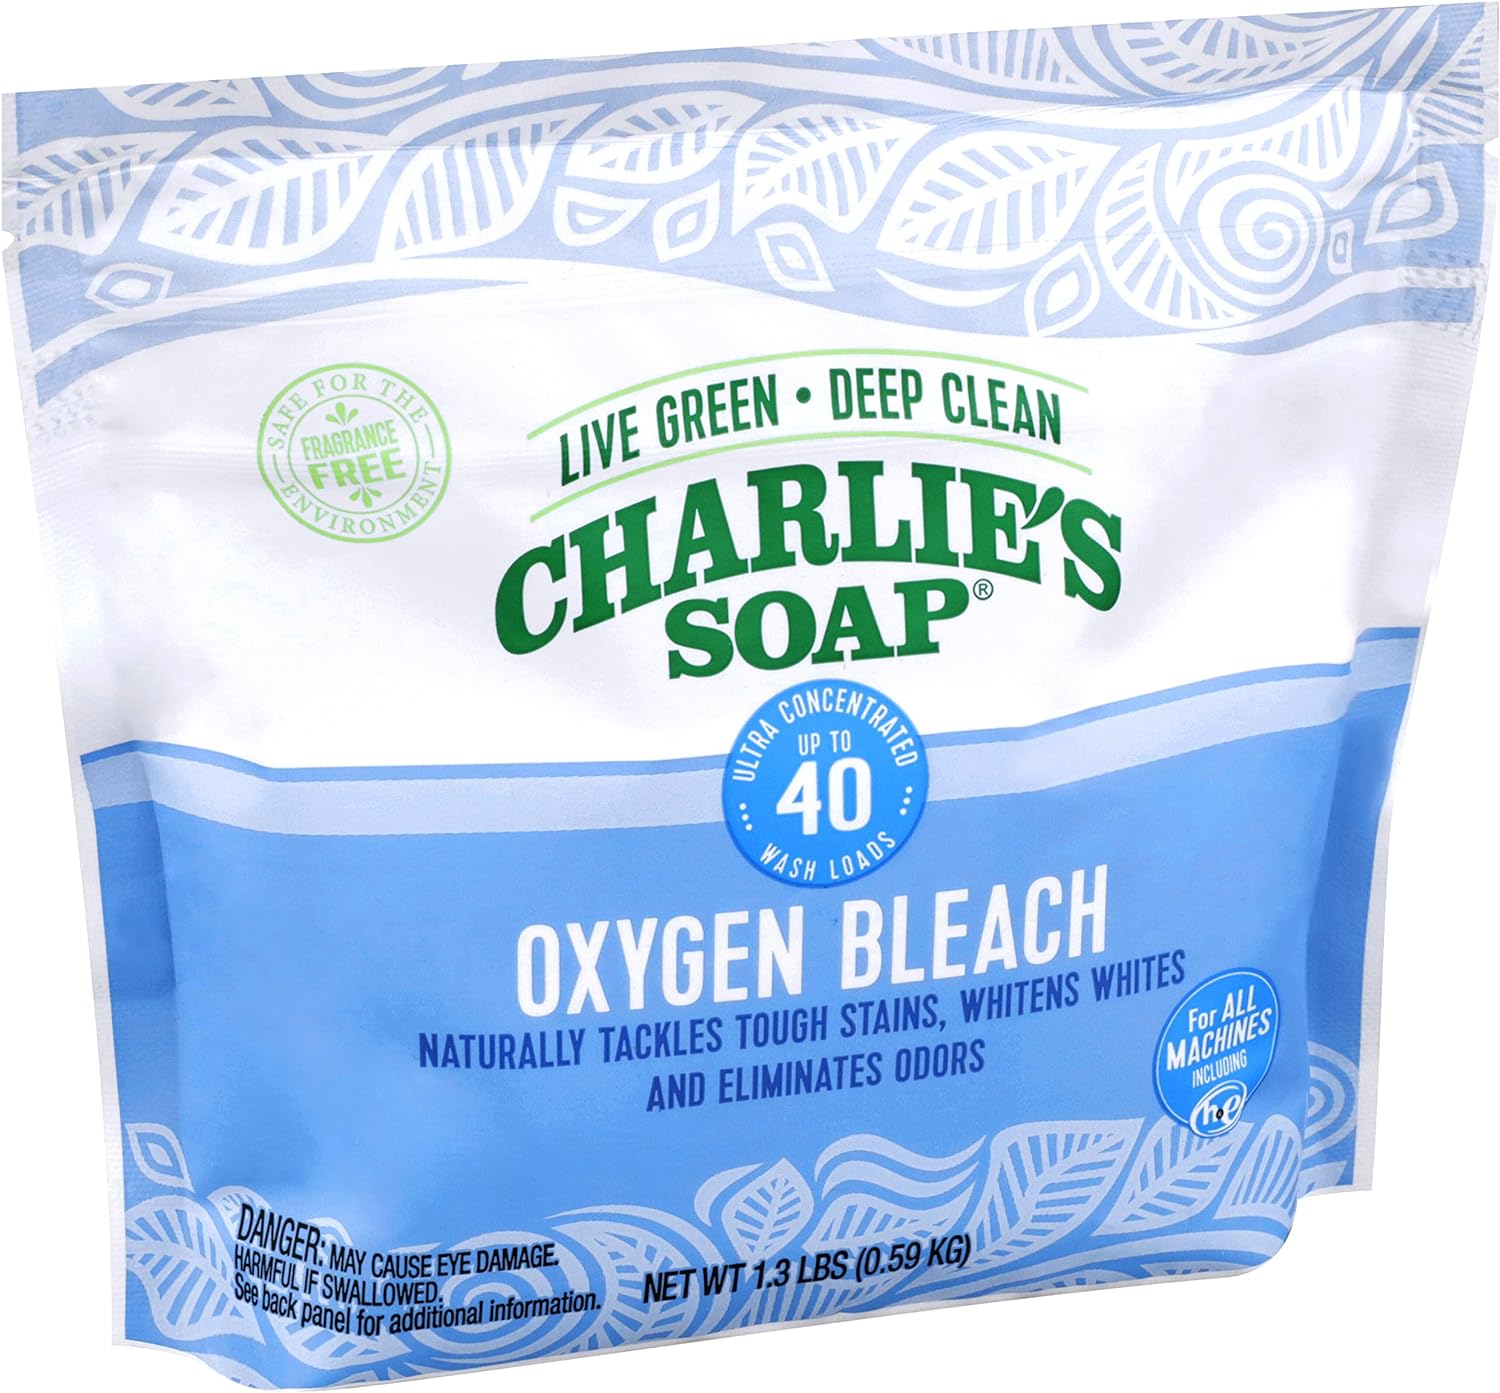 Charlie's Soap Color Safe Chlorine Free Oxygen Bleach Powder, 1.3 lbs (0.59 kg) : Health & Household